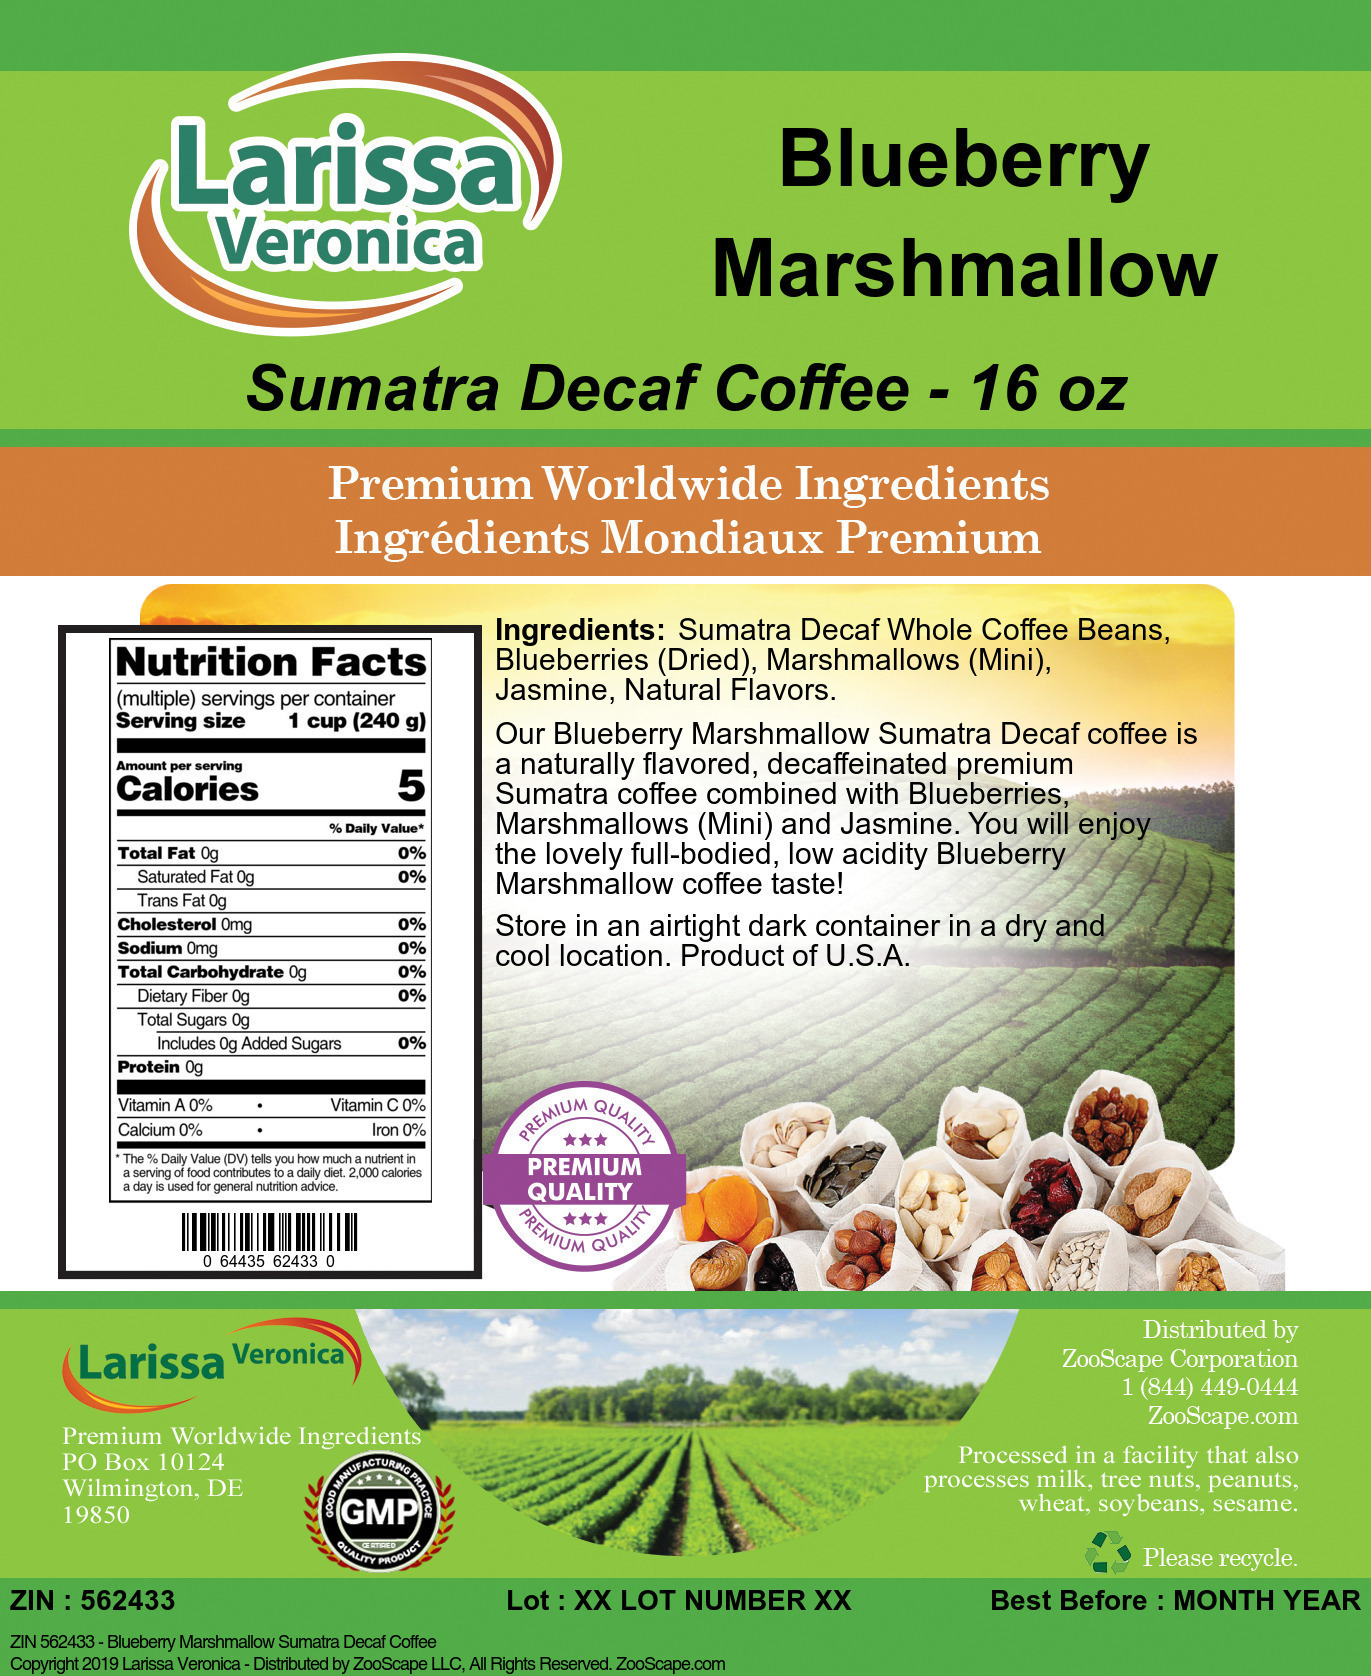 Blueberry Marshmallow Sumatra Decaf Coffee - Label